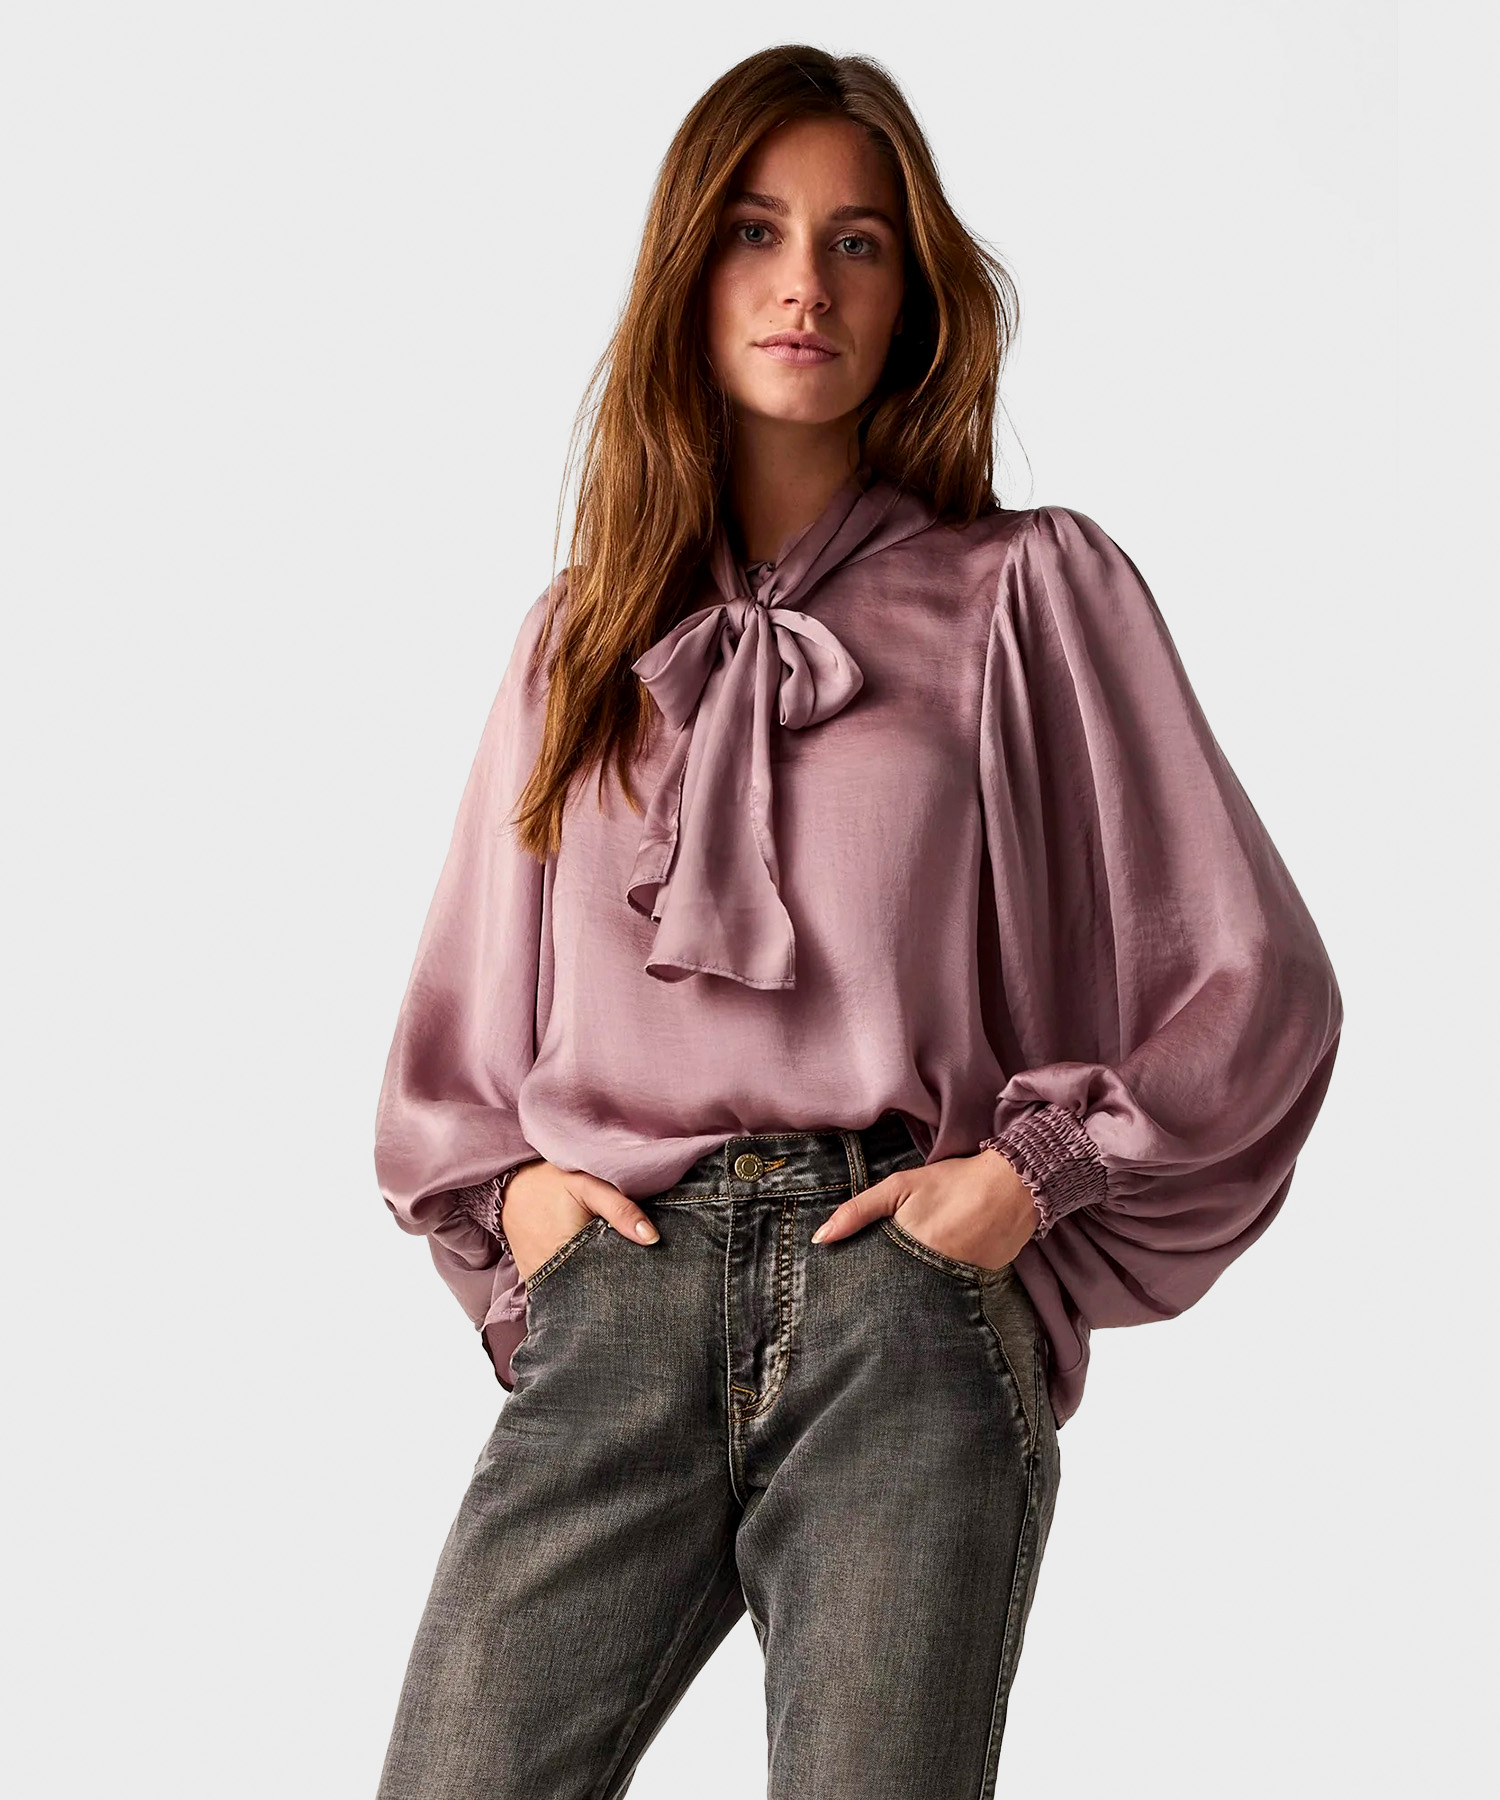 Fractie Volharding Leerling Summum blouse strik | BeOne